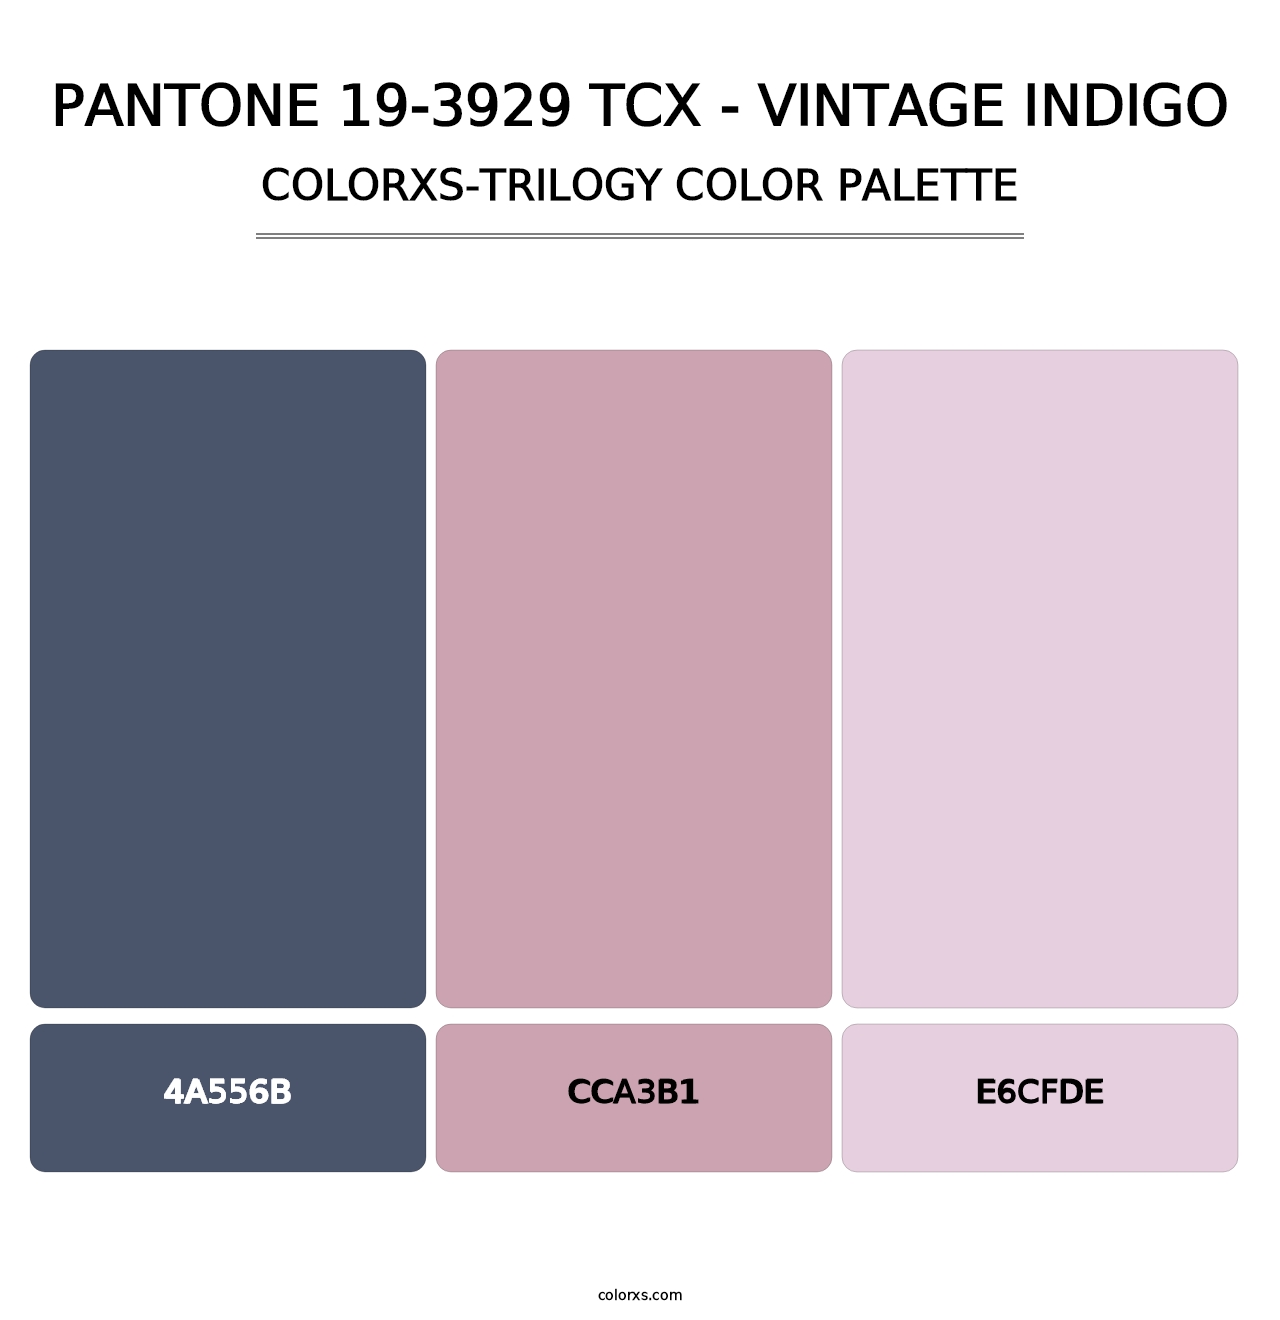 PANTONE 19-3929 TCX - Vintage Indigo - Colorxs Trilogy Palette